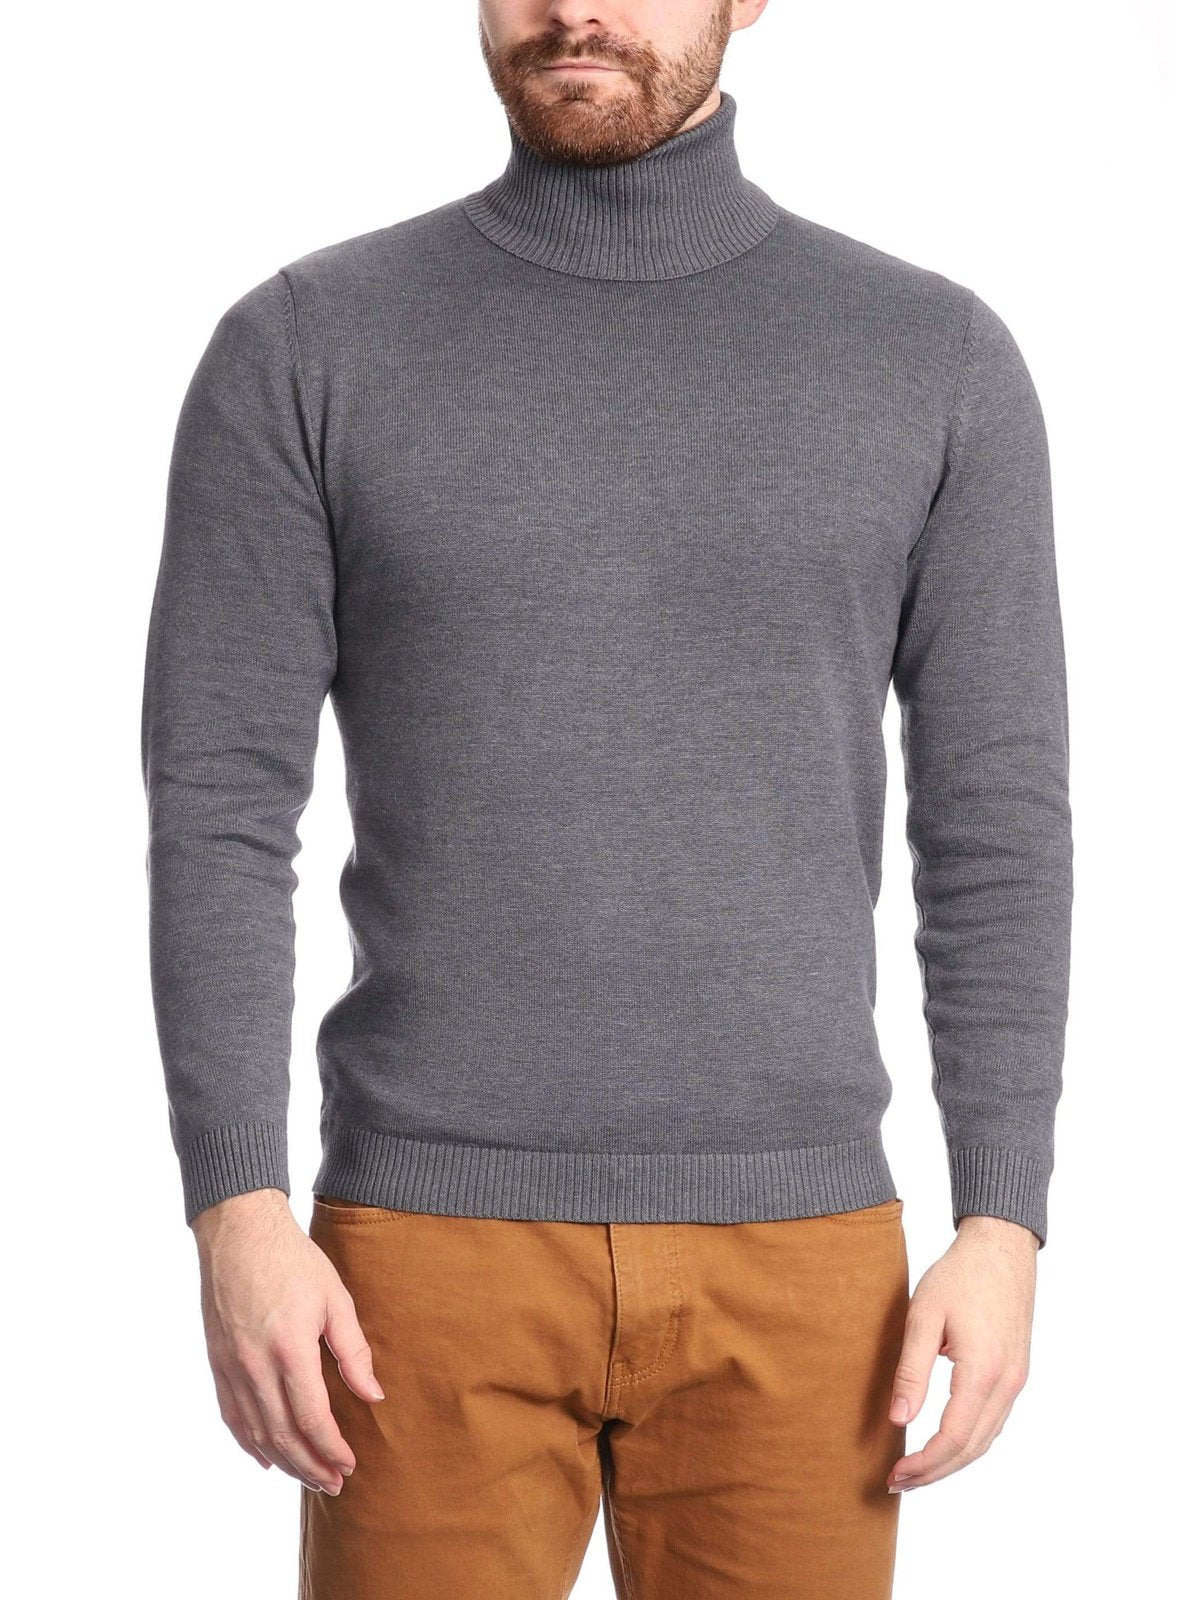 Arthur Black Default Category Migrated Gray / S Arthur Black Men's Solid Gray Pullover Cotton Blend Turtleneck Sweater Shirt